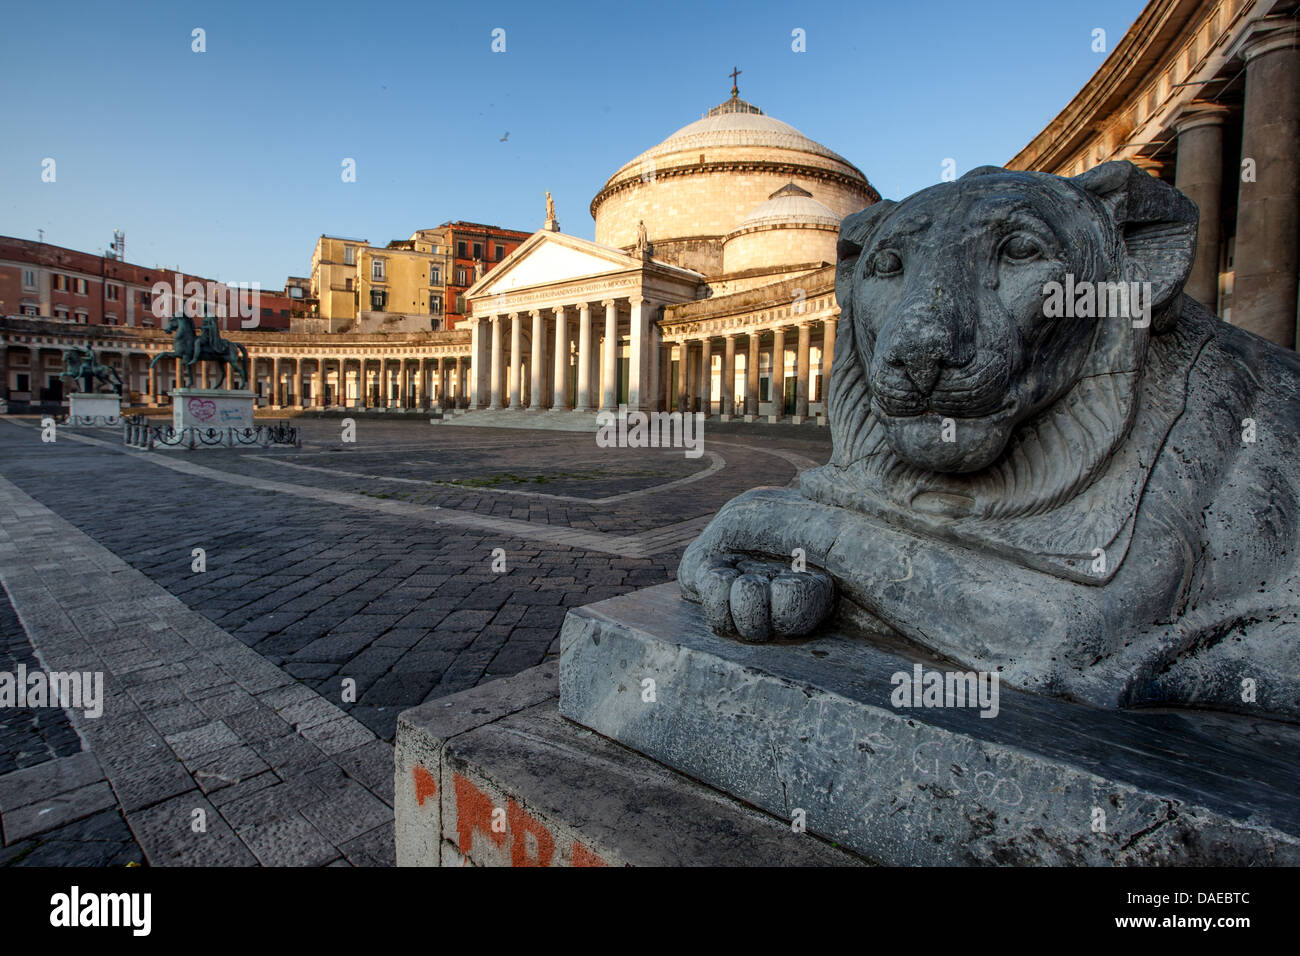 Naples, Square of the plebiscite Stock Photo